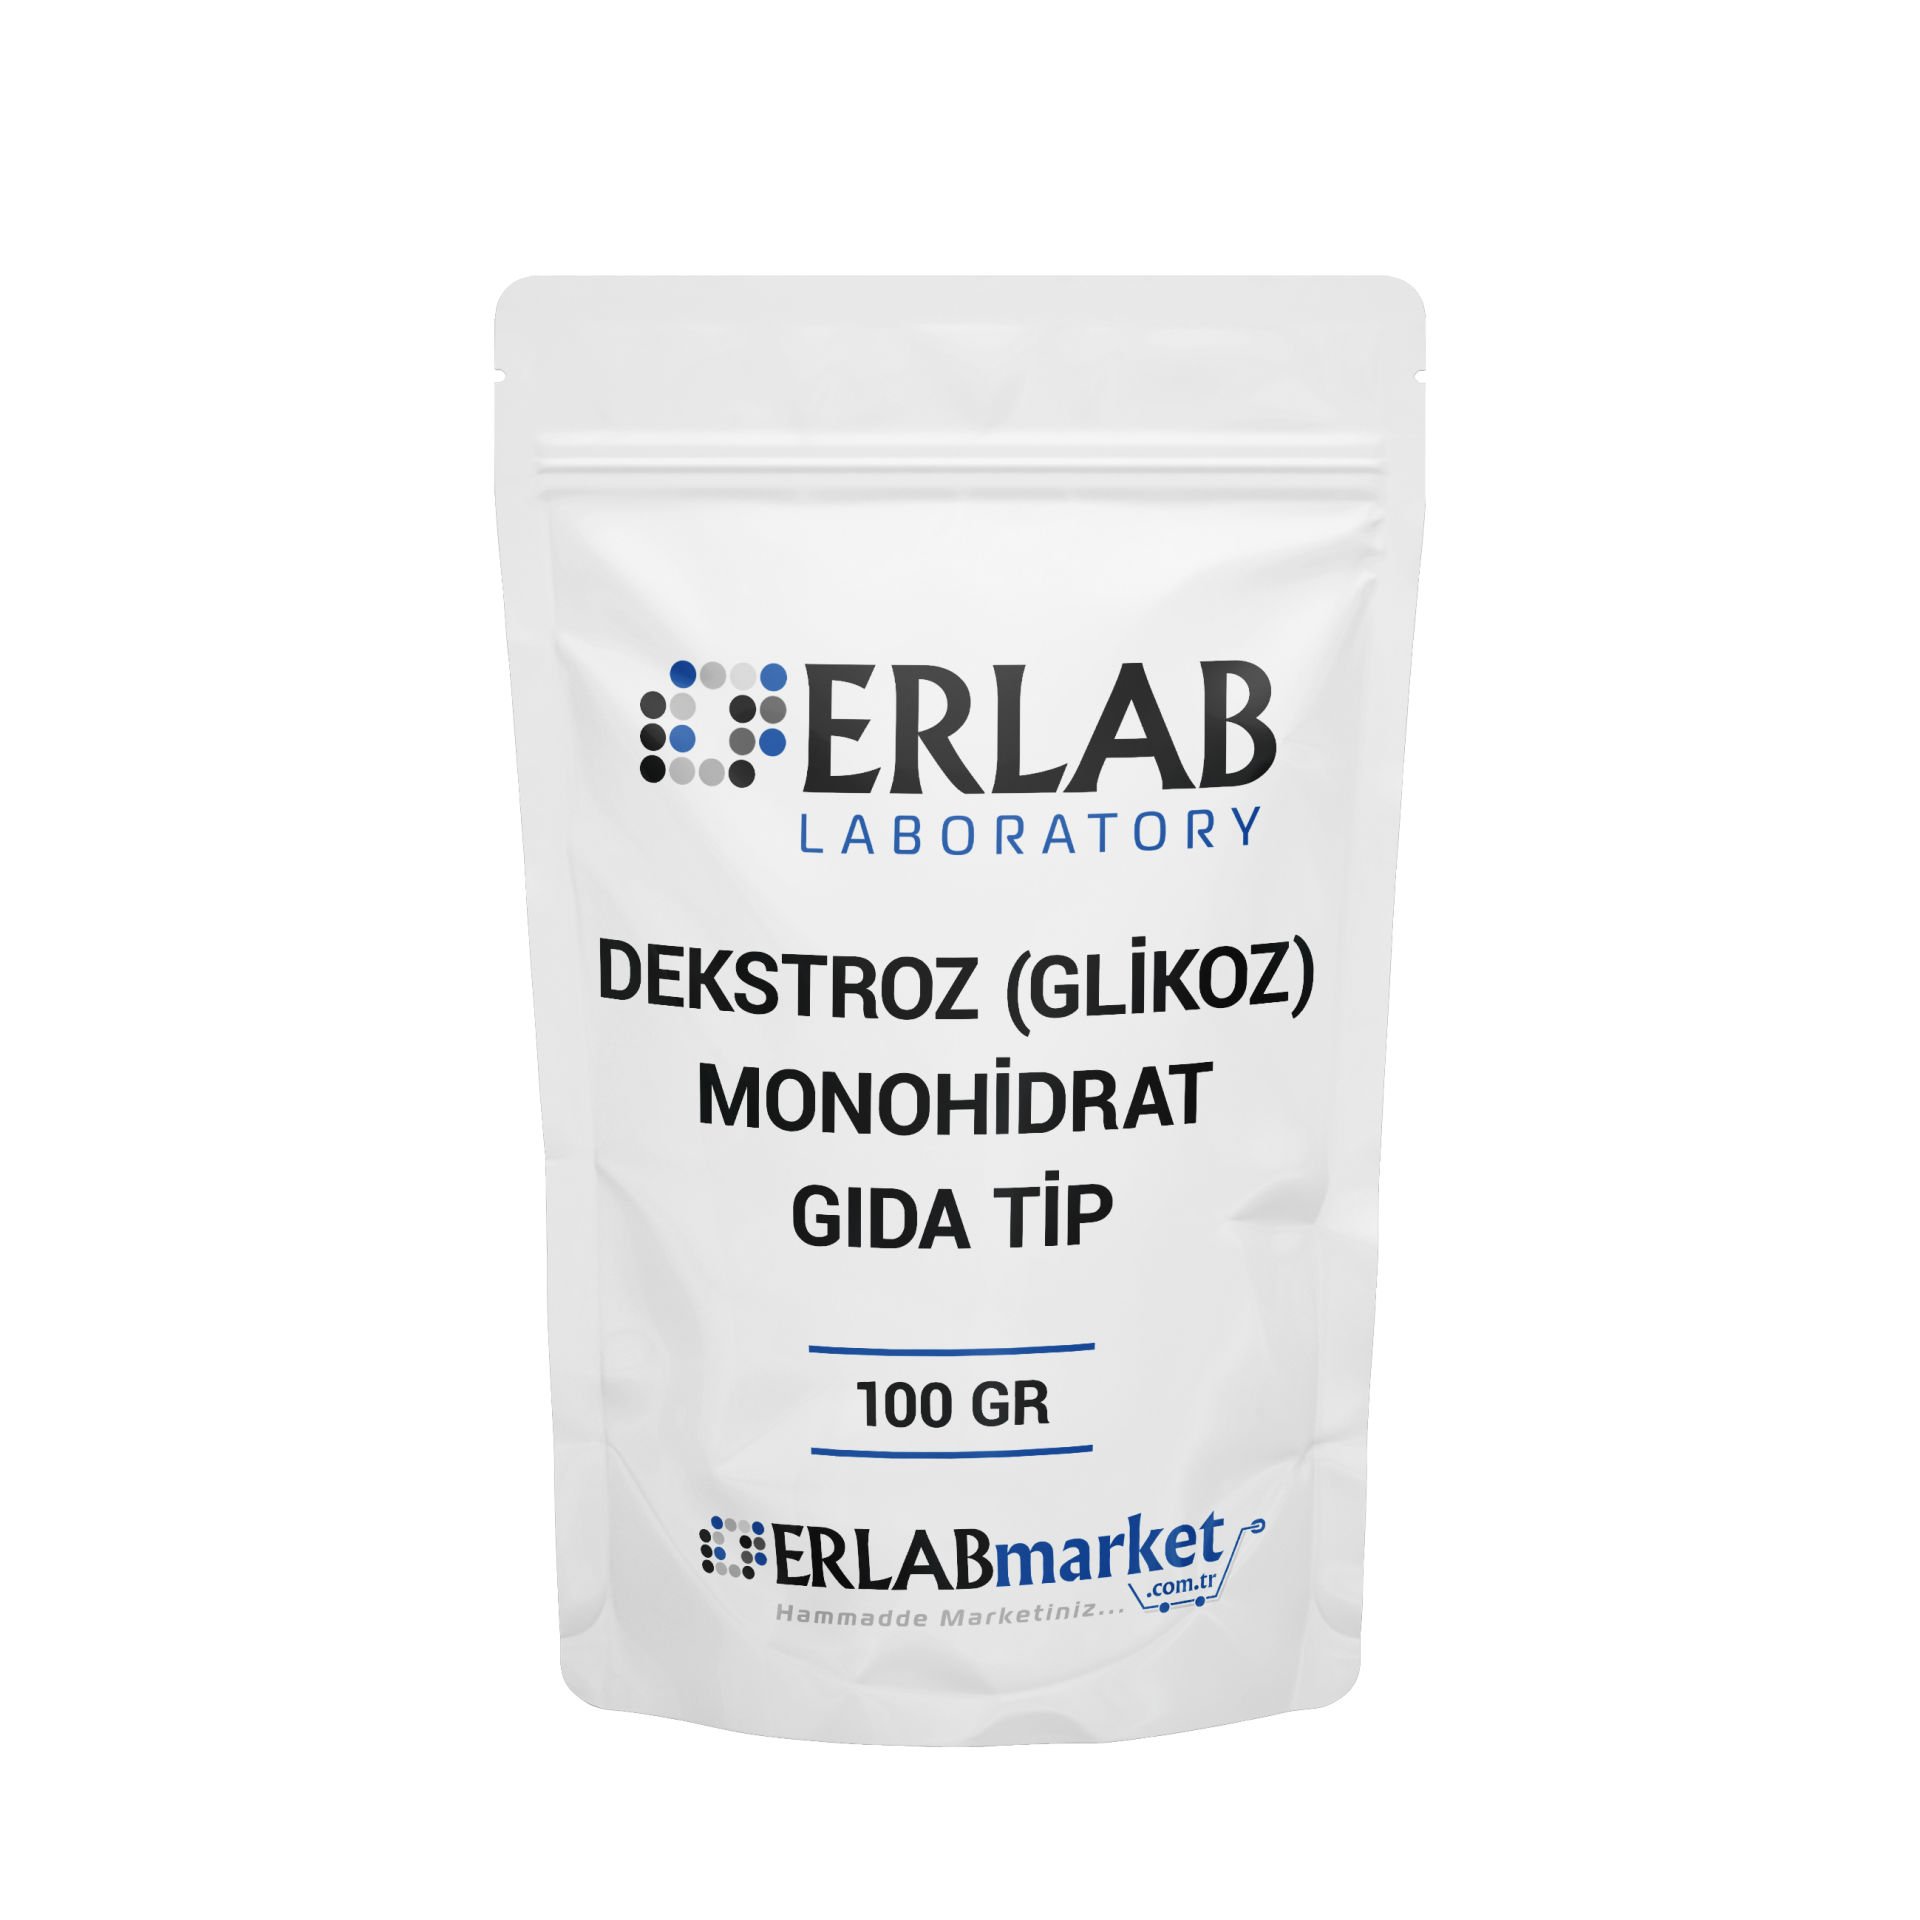 Glikoz Monohidrat - 100 GRAM  Dekstroz - Glucose monohydrate